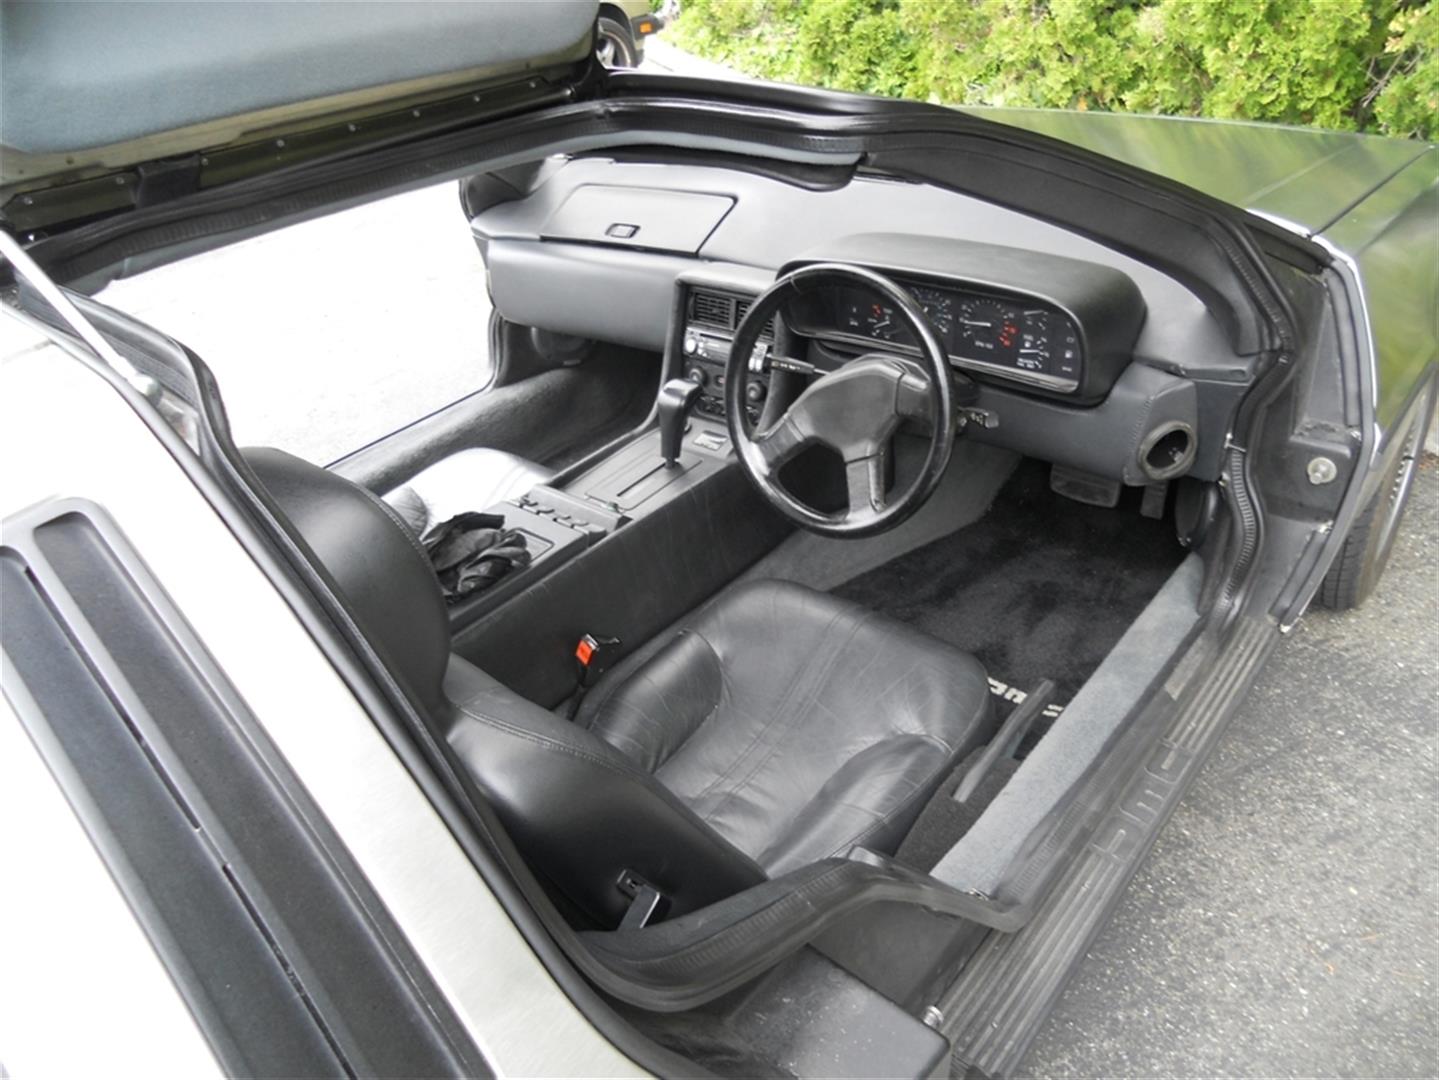 Vehicle Controls (10) | DeLoreanDirectory.com